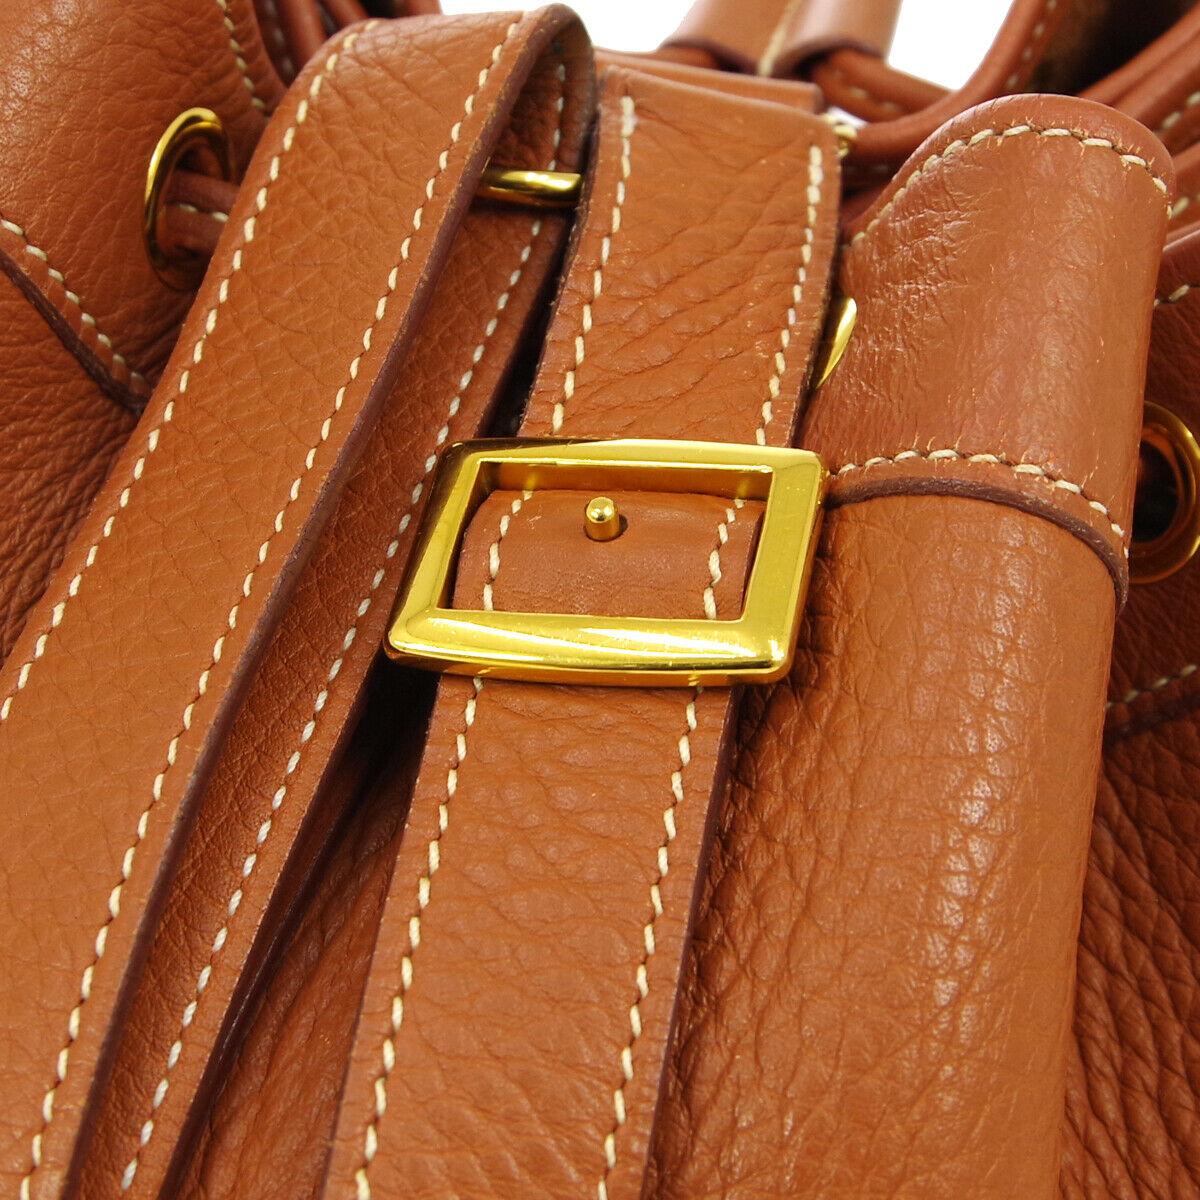 
Leather
Gold tone hardware
Drawstring closure
Suede lining
Made in France
Adjustable shoulder strap 9-17